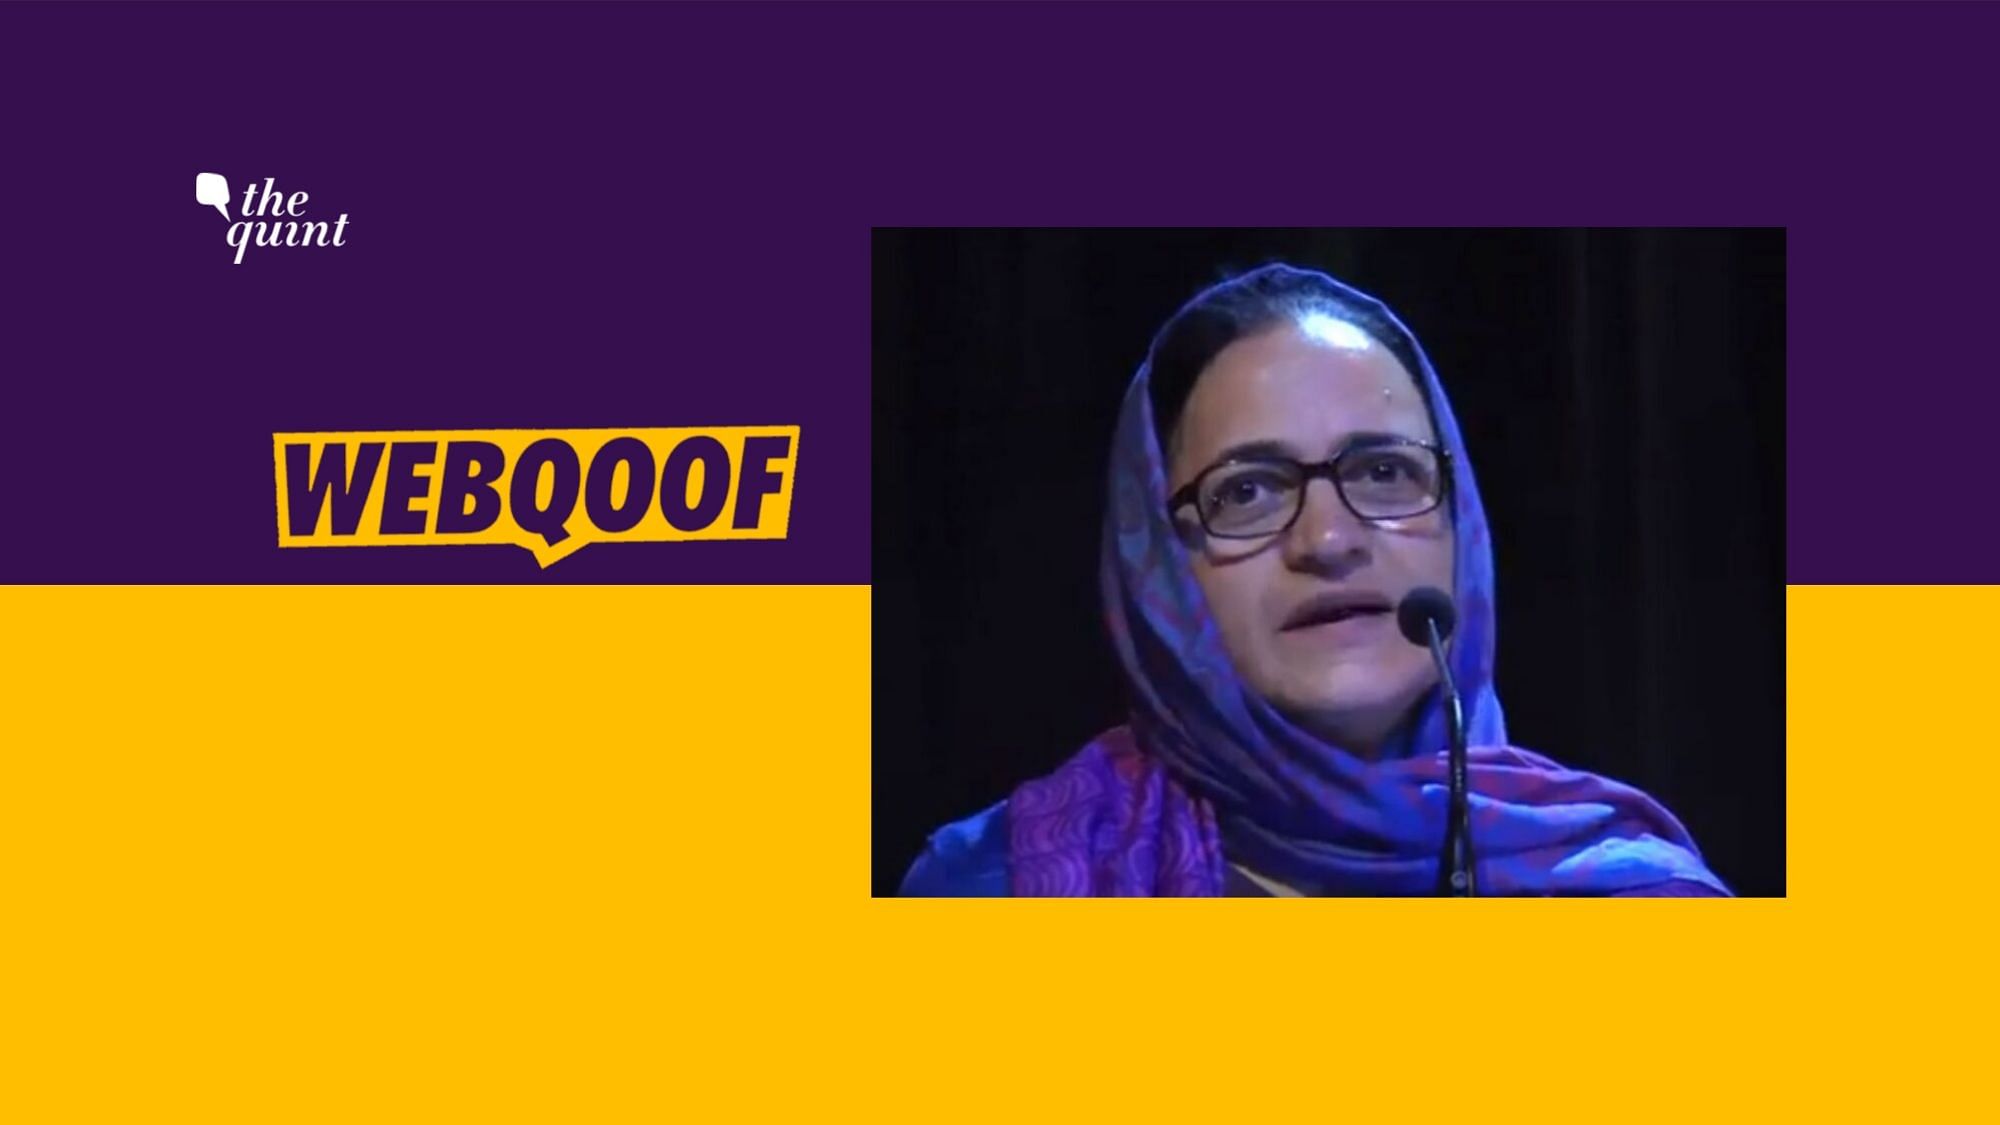 The woman in the video is Professor Hameedah Nayeem of Kashmir University.